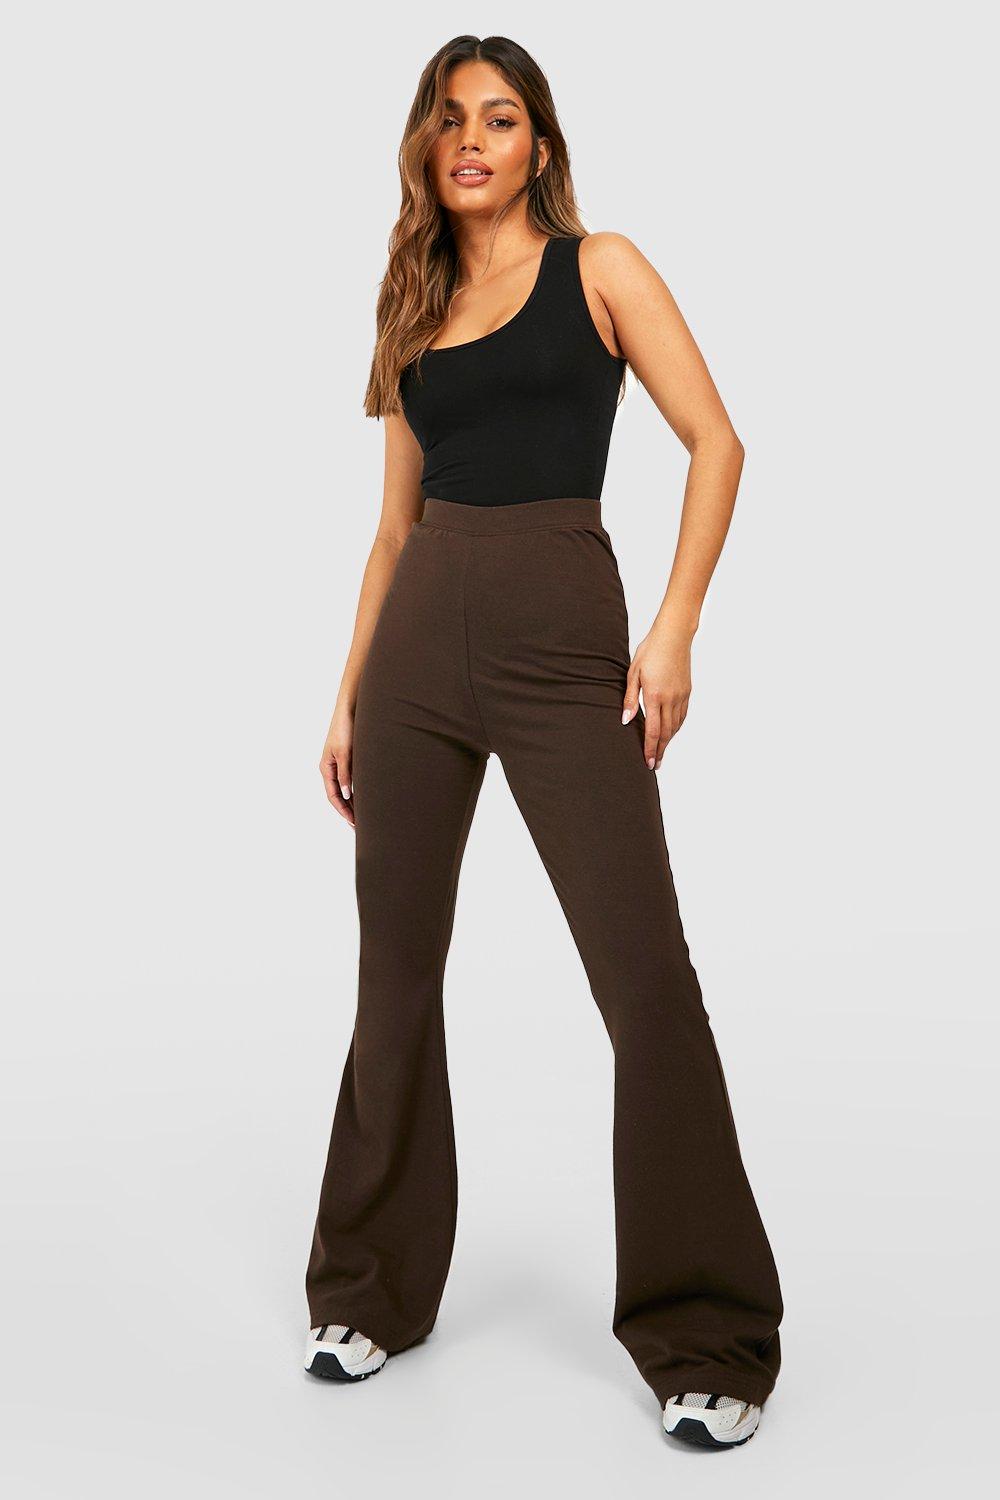 https://media.boohoo.com/i/boohoo/gzz48958_black_xl_2/female-black-cotton-2-pack-black-&-chocolate-high-waisted-flared-trousers